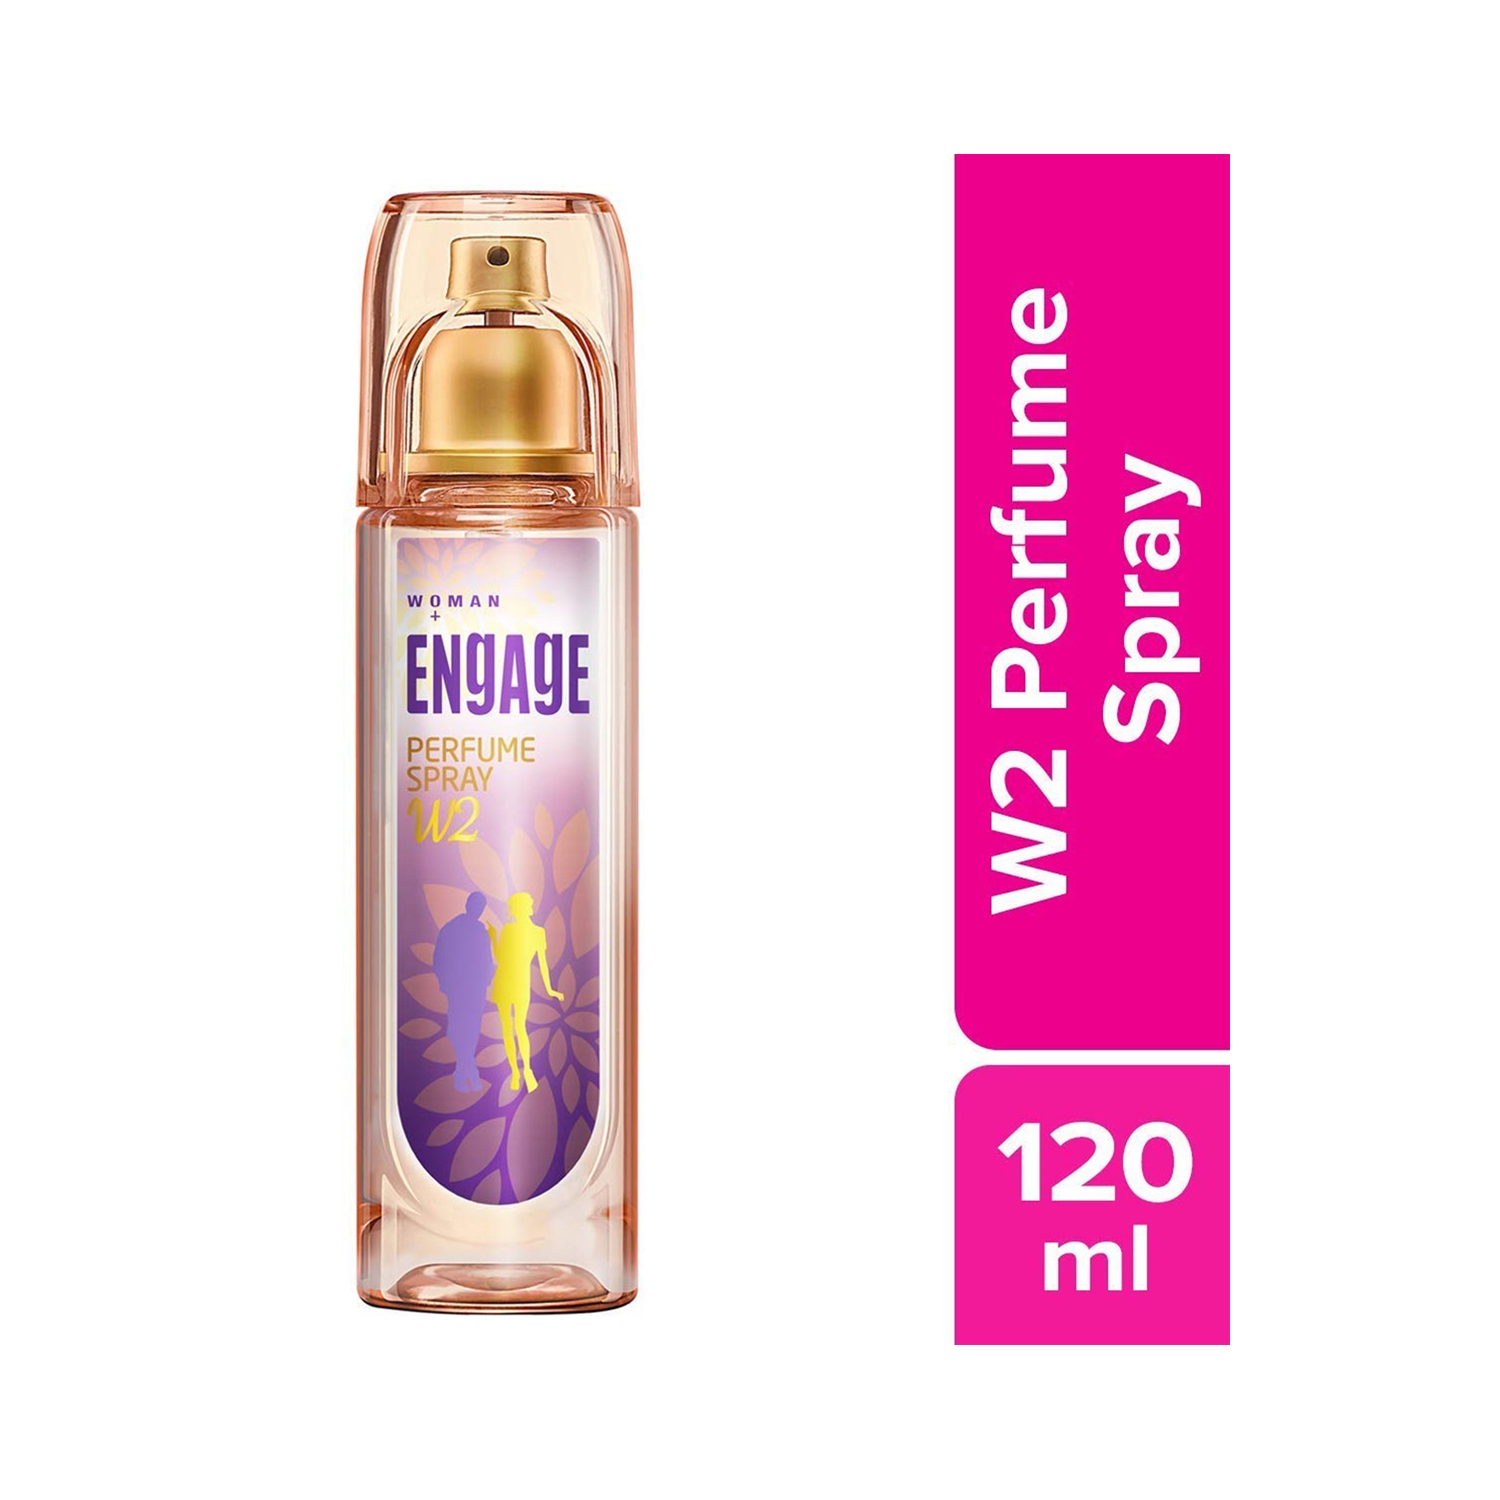 Engage | Engage W2 Perfume Spray For Women (120ml)